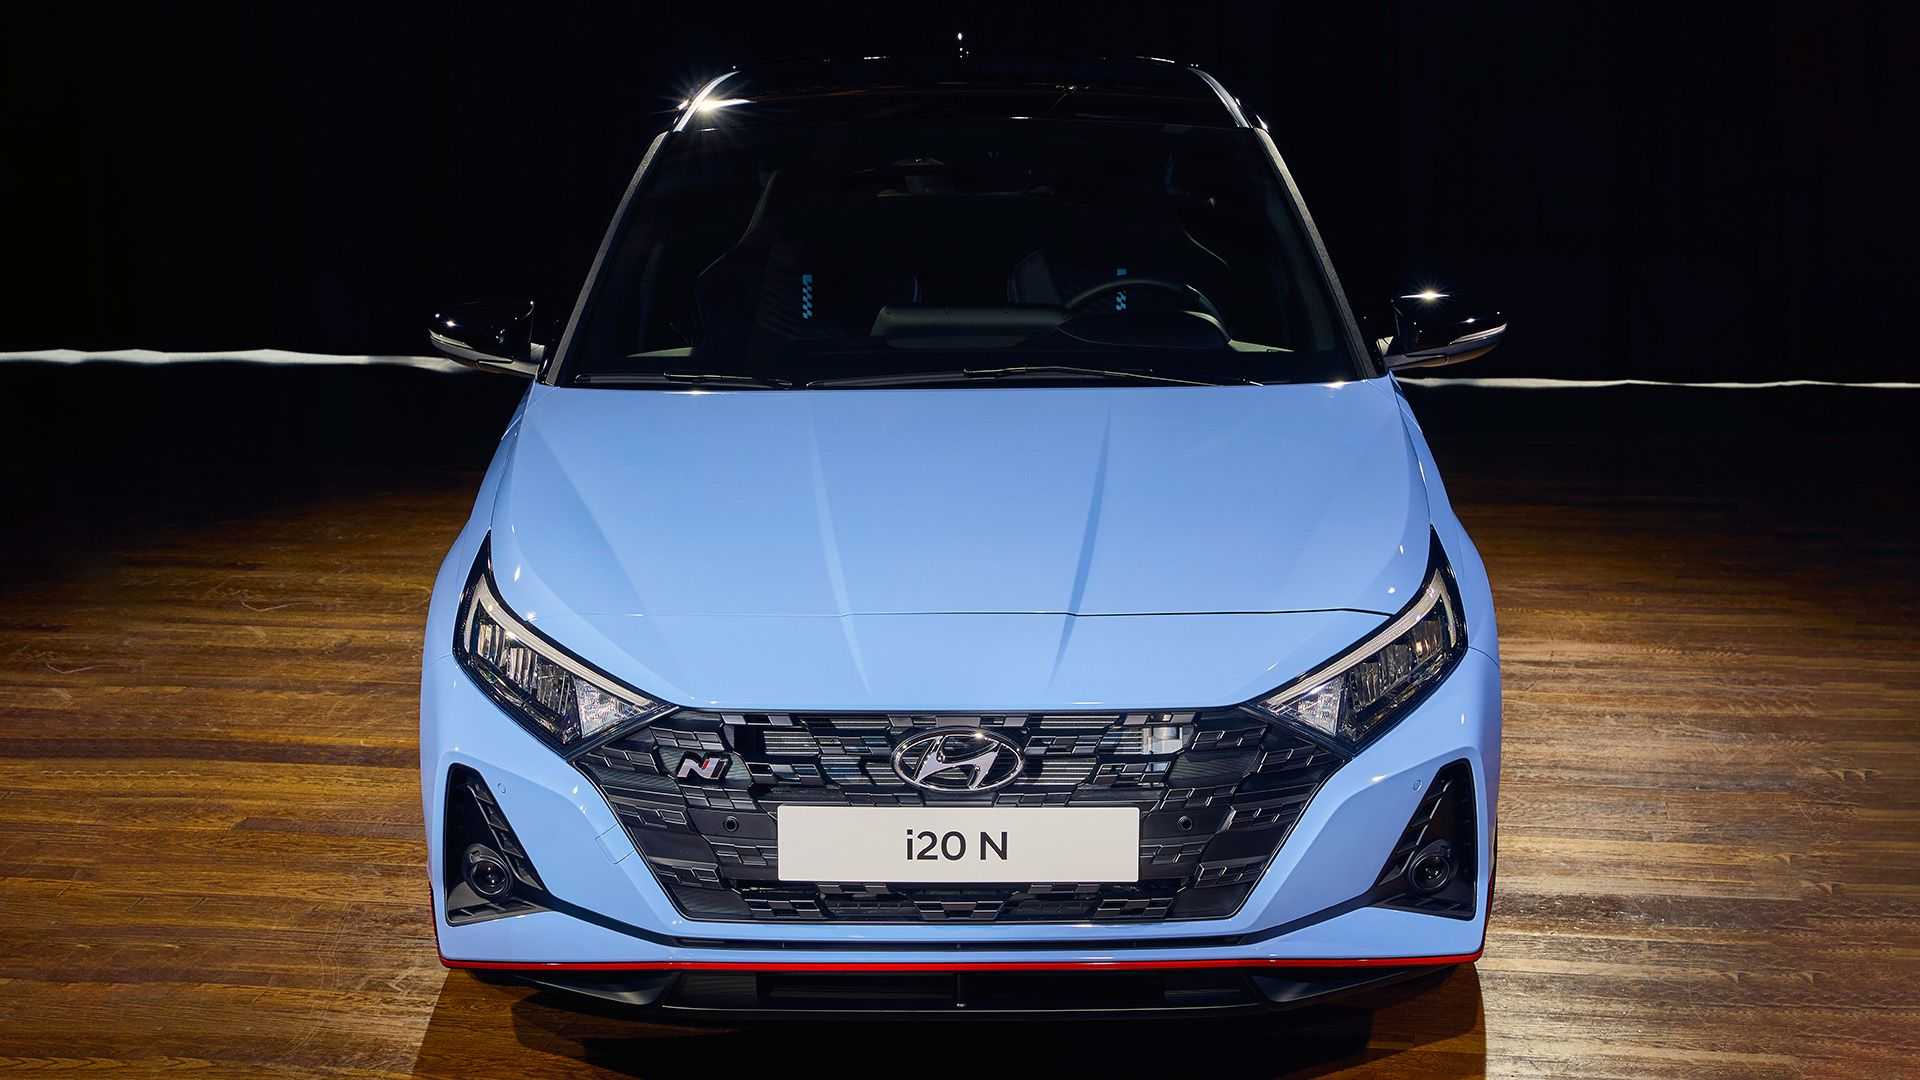 View Photos of the 2021 Hyundai i20 N